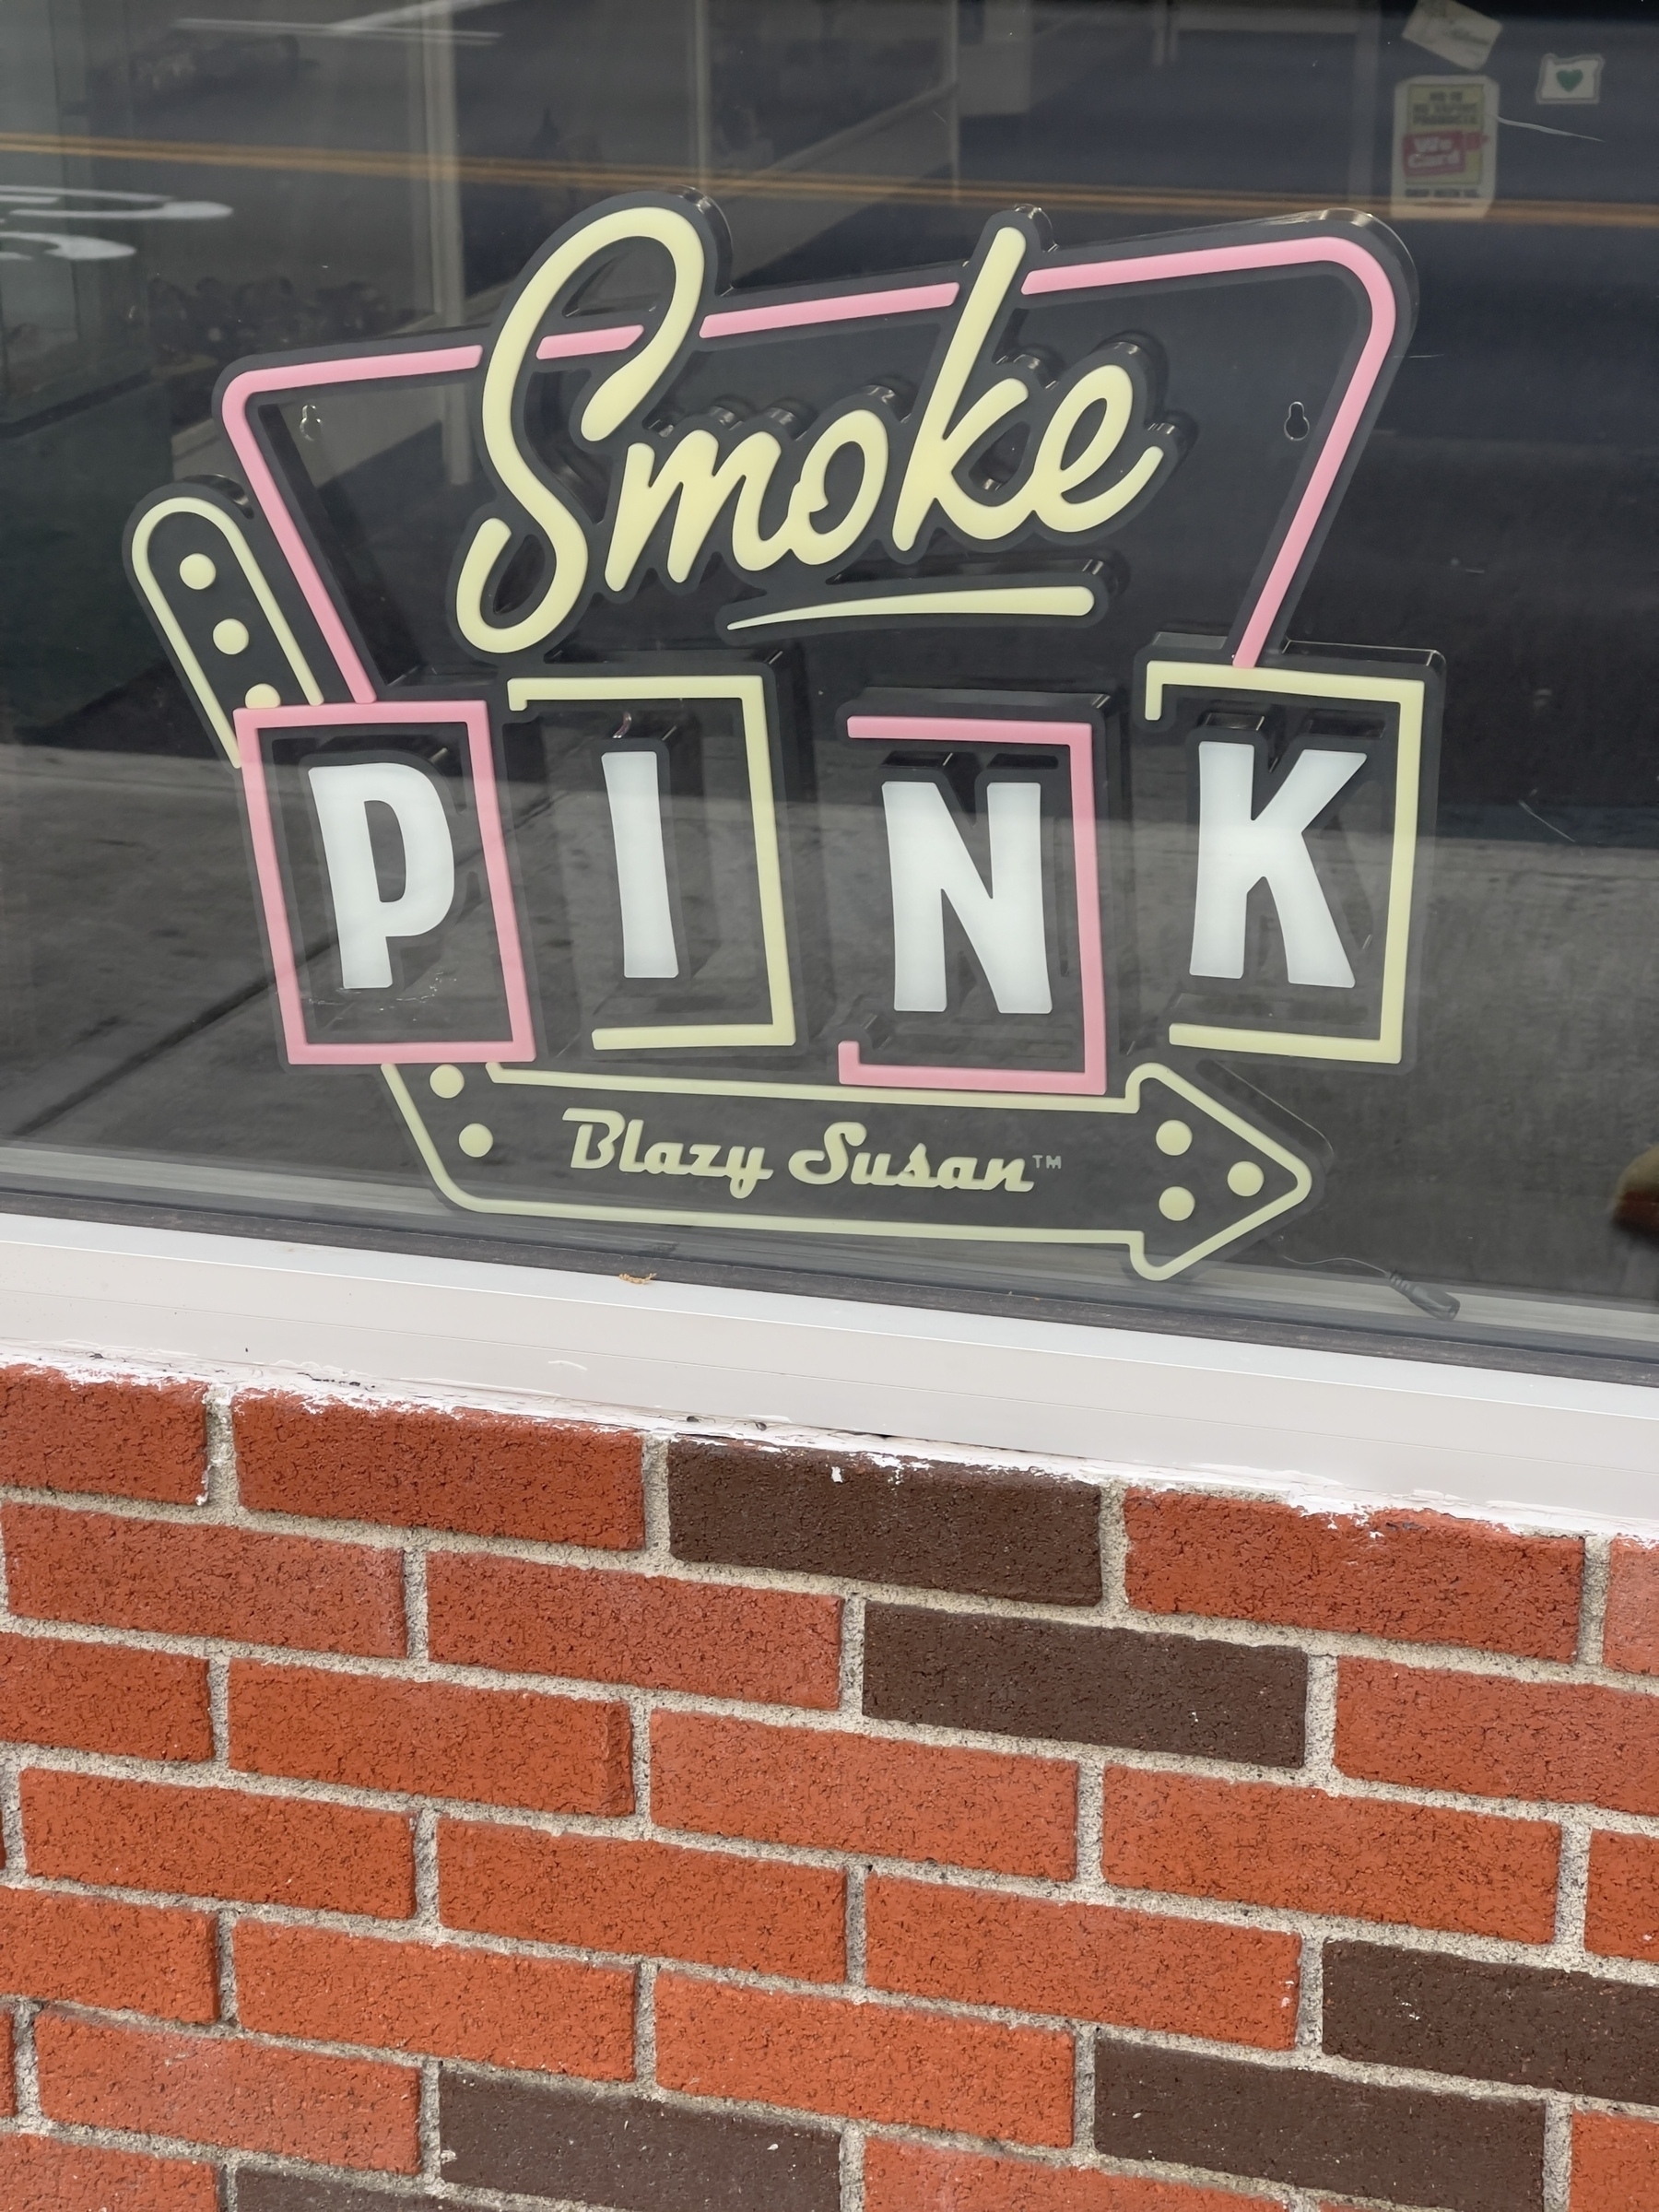 Retro “Smoke Pink” sign in shop window.